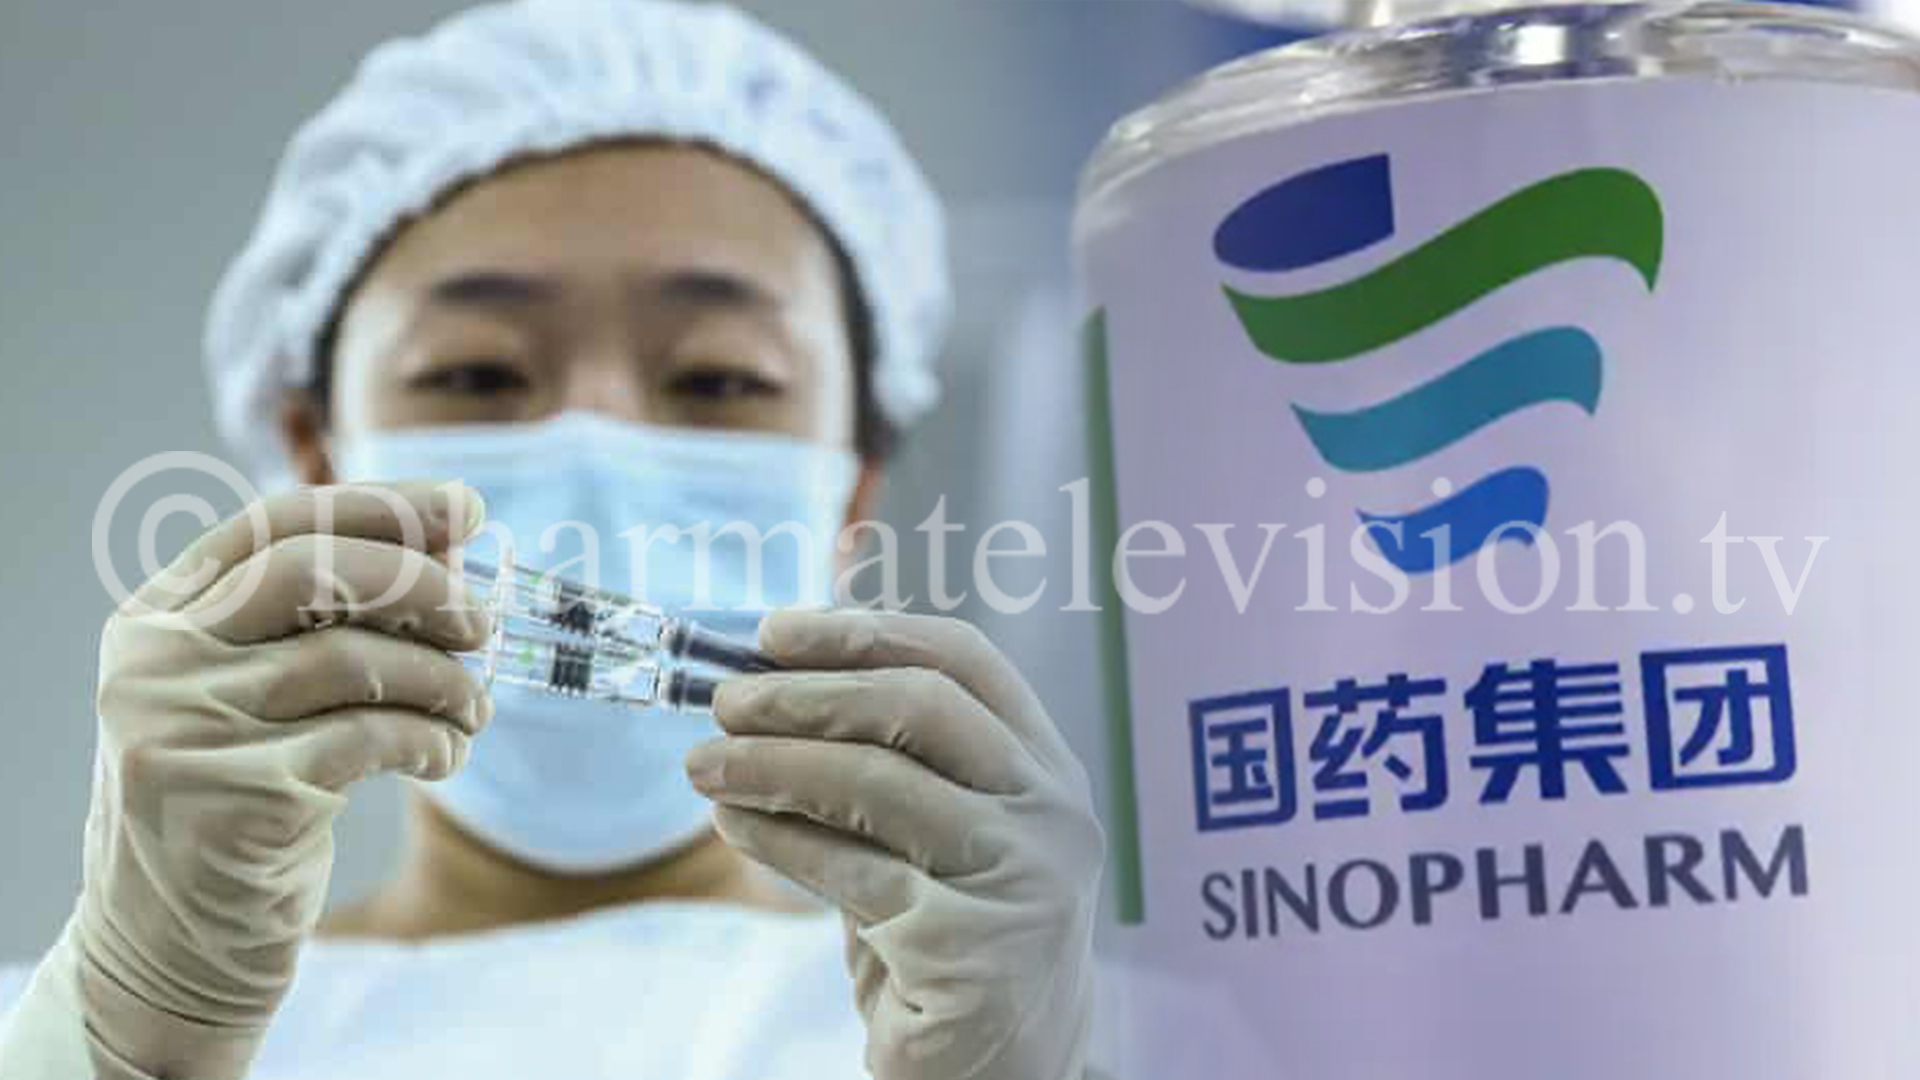 China authorizes Sinopharm vaccine for general use against corona